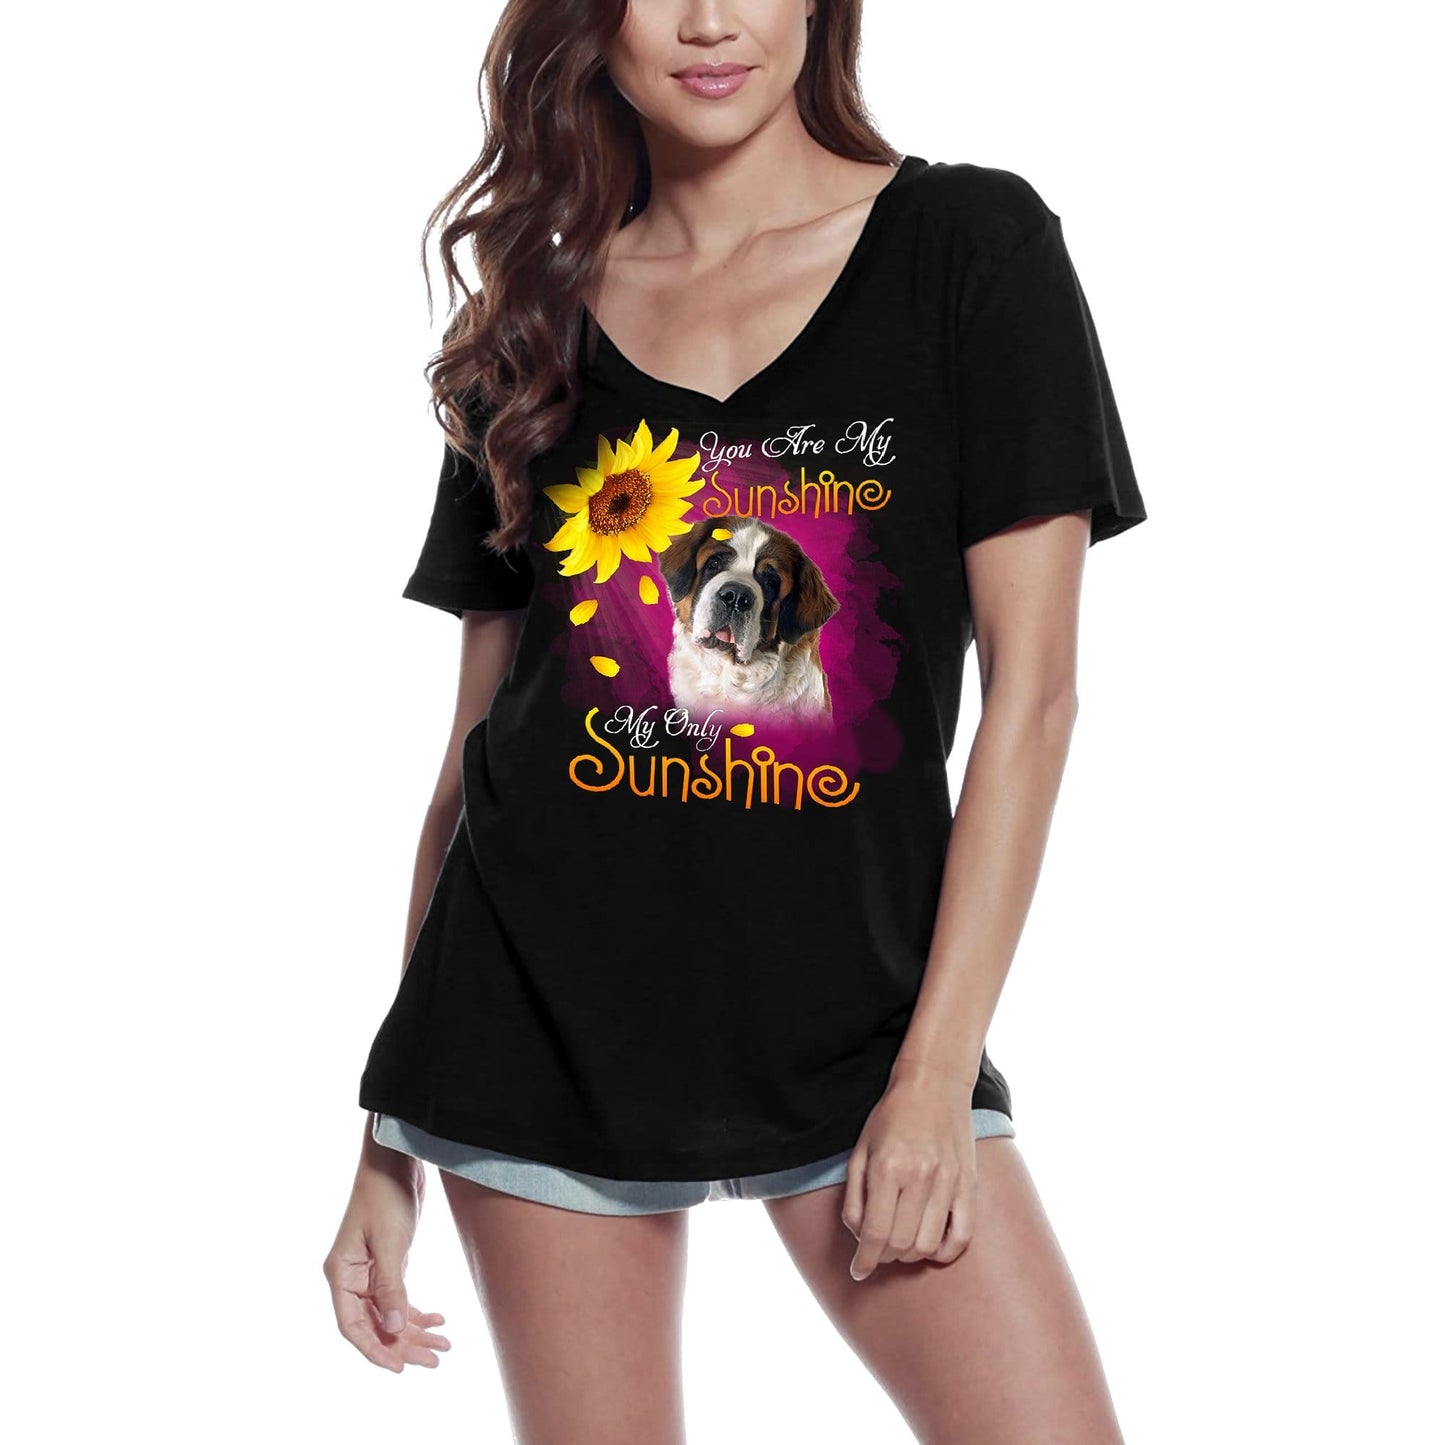 ULTRABASIC Women's V-Neck T-Shirt My Only Sunshine - Saint Bernard - Vintage Shirt